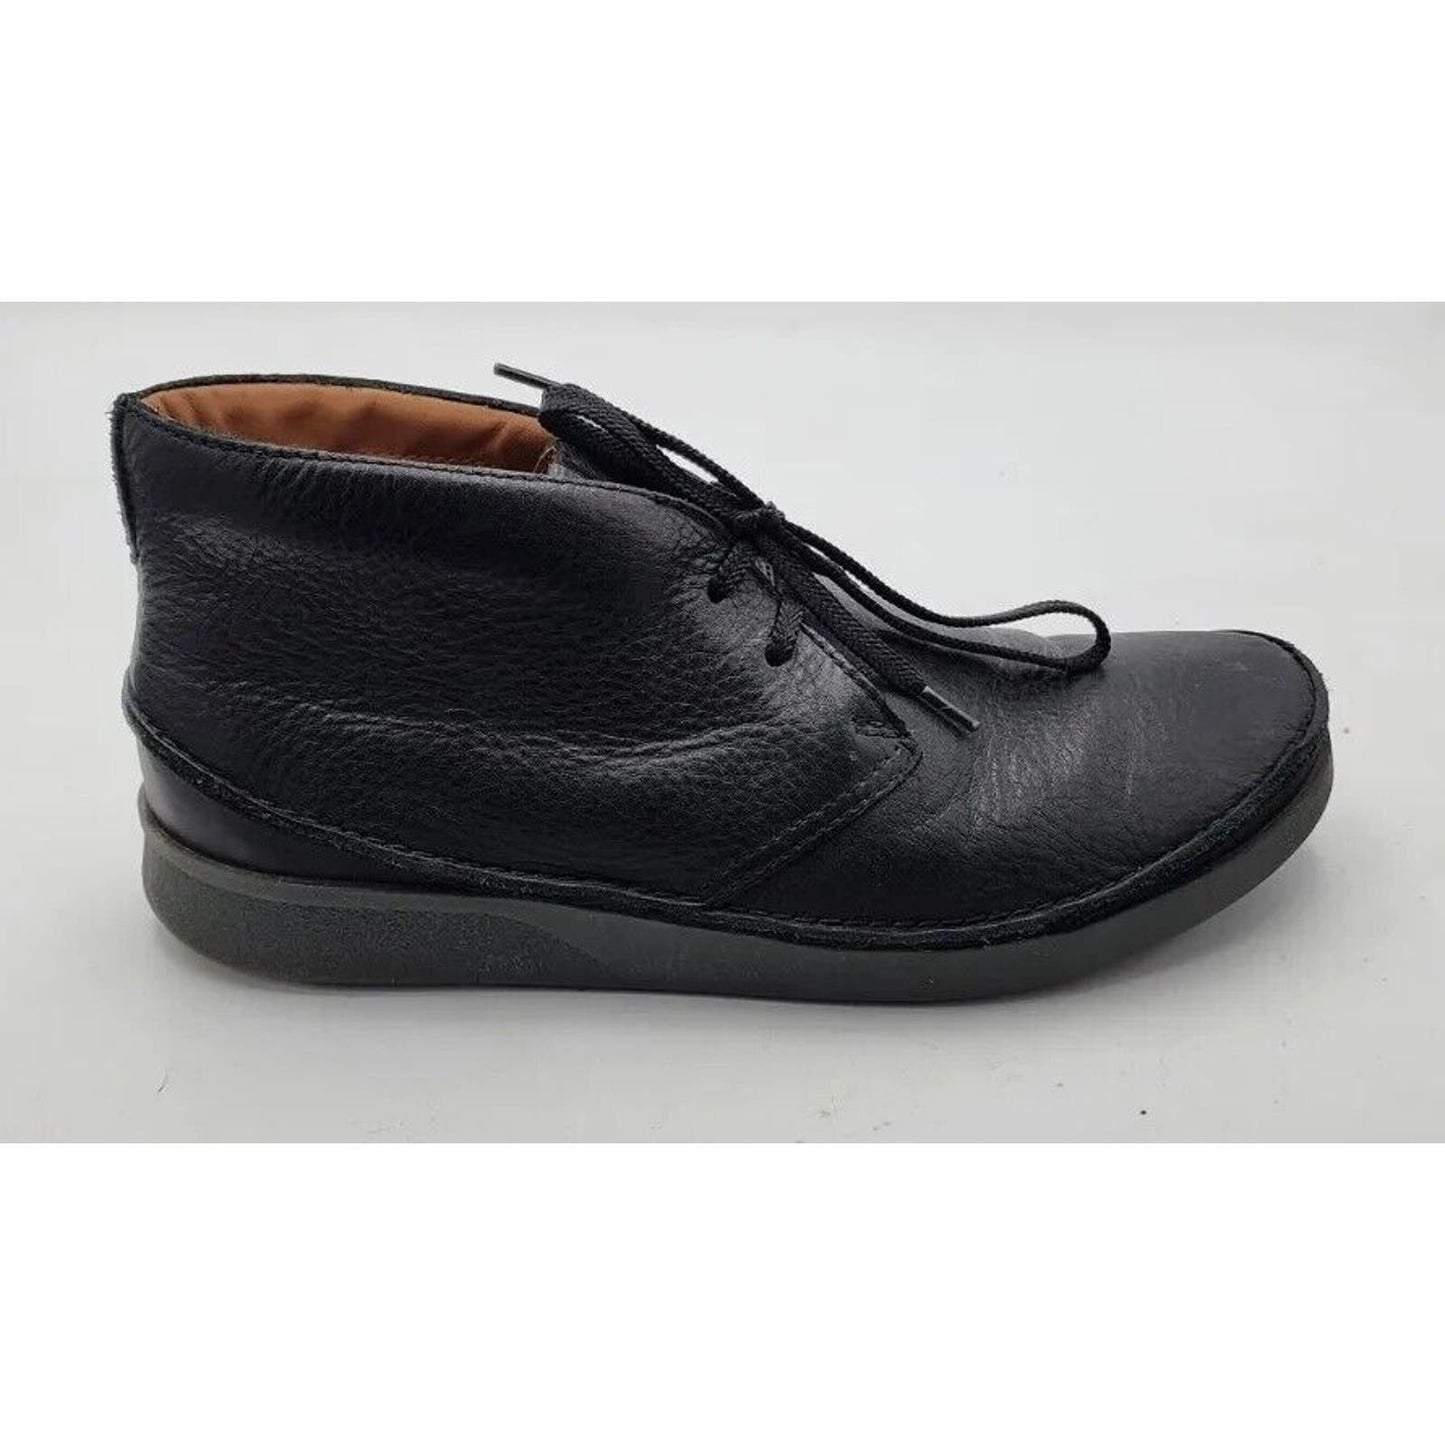 CLARKS ACTIVE AIR Black Soft Leather Chukka Boots Shoes Men's Size 9.5 M US EUC